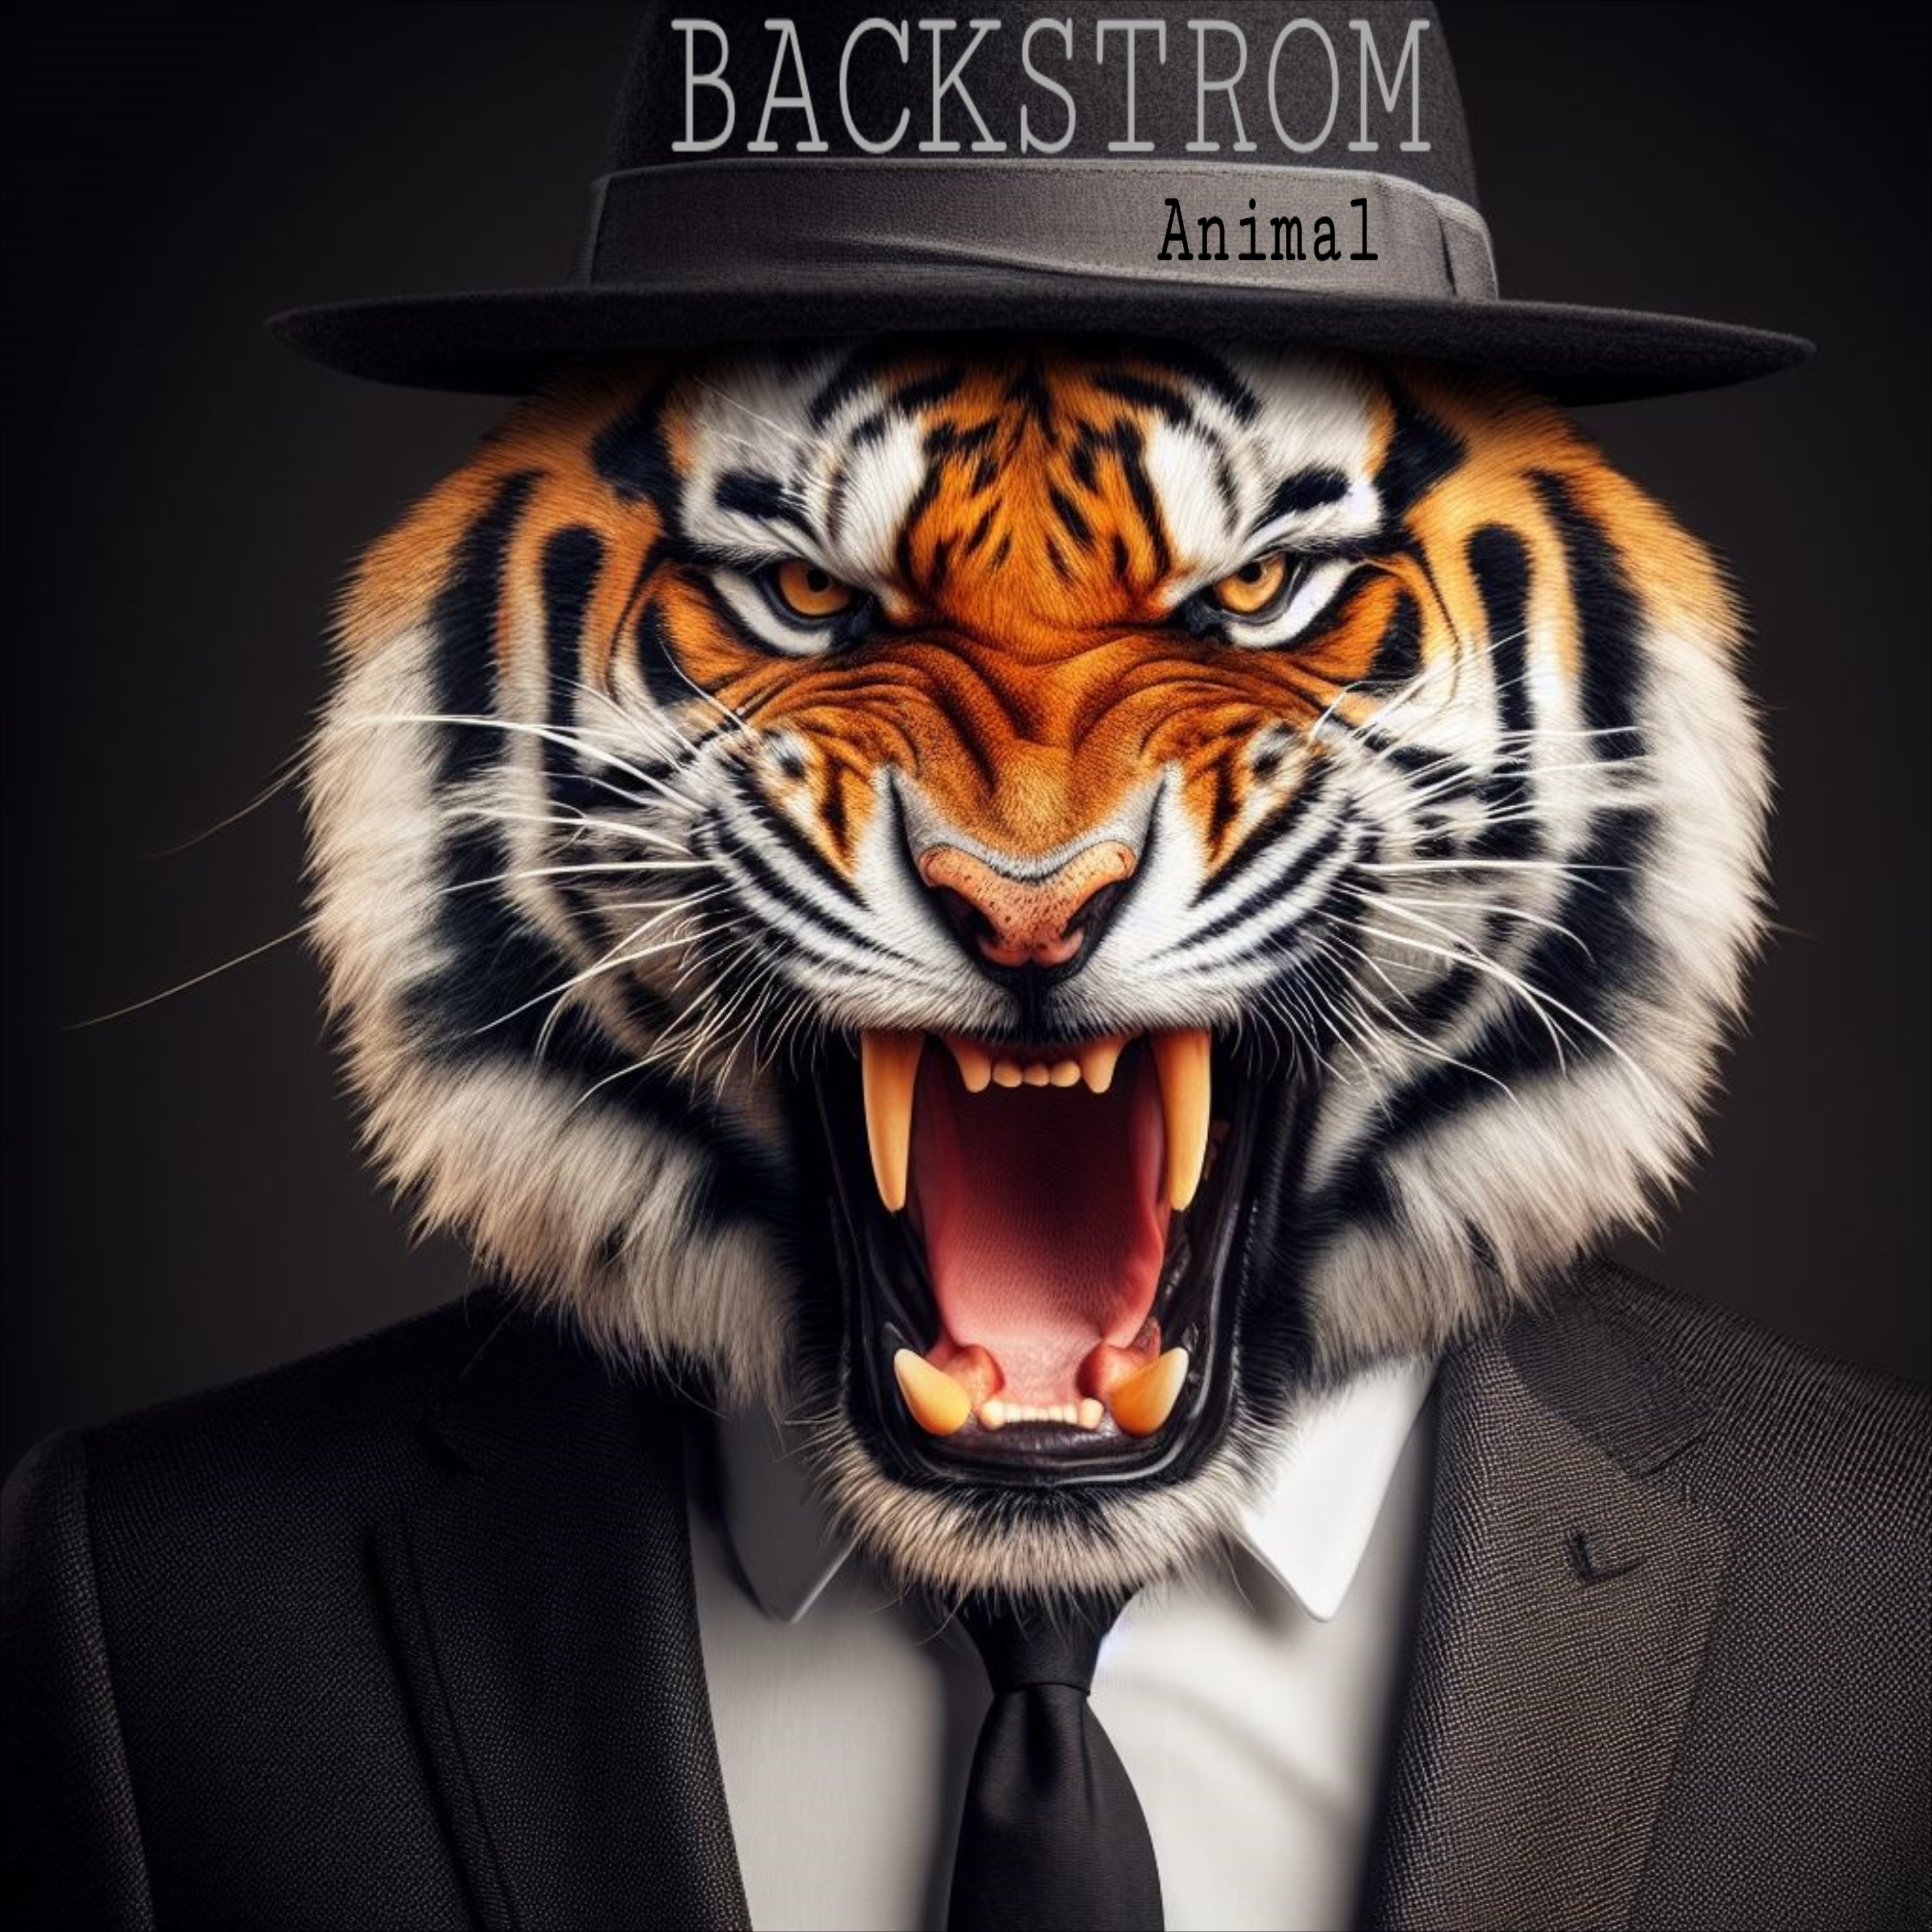 Backstrom x Bart Topher – “Animal”